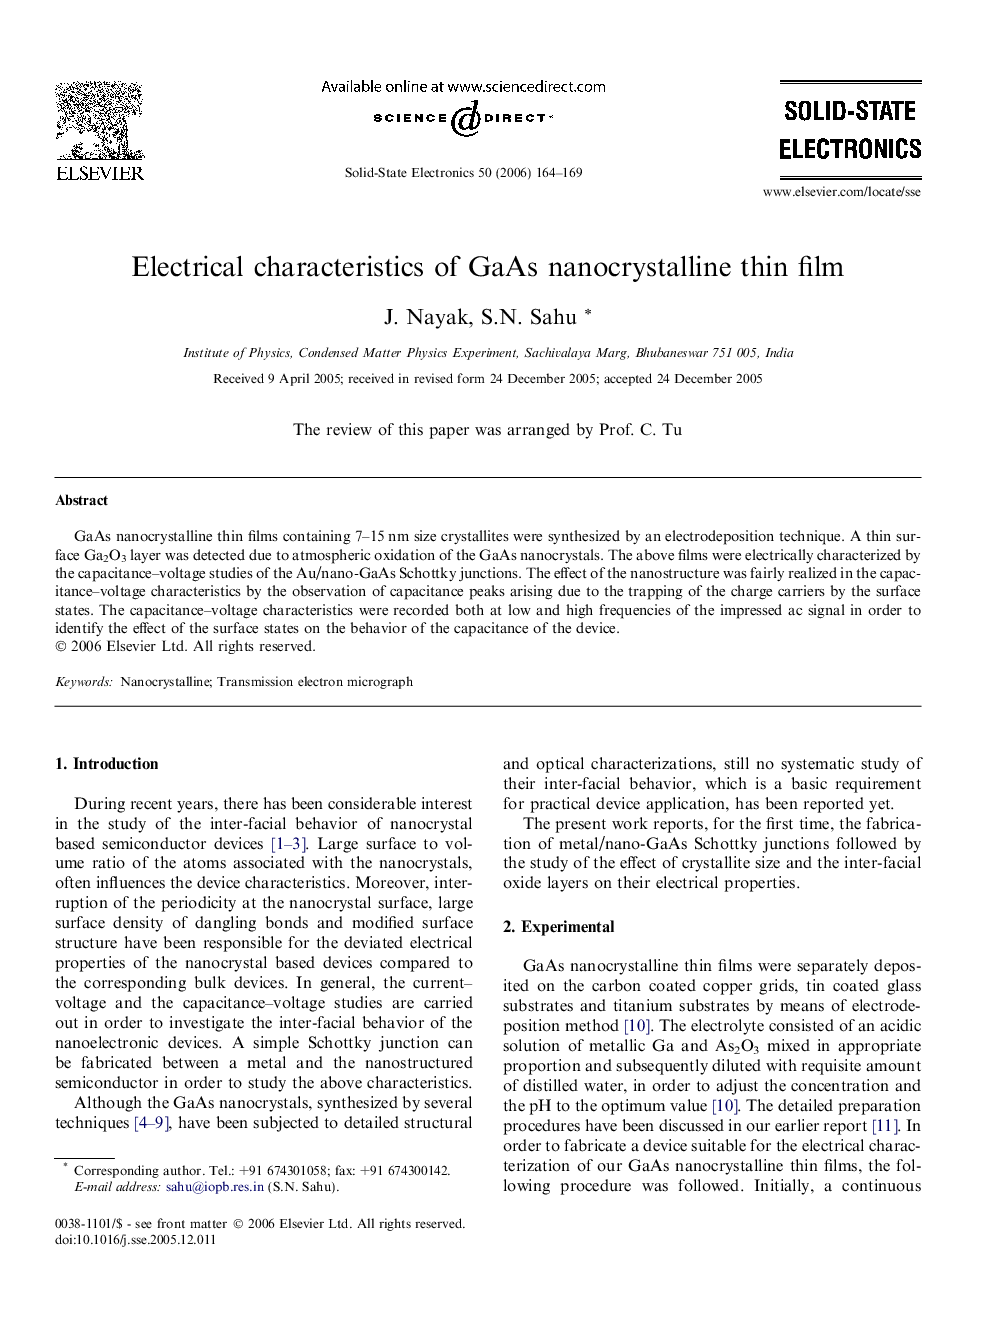 Electrical characteristics of GaAs nanocrystalline thin film